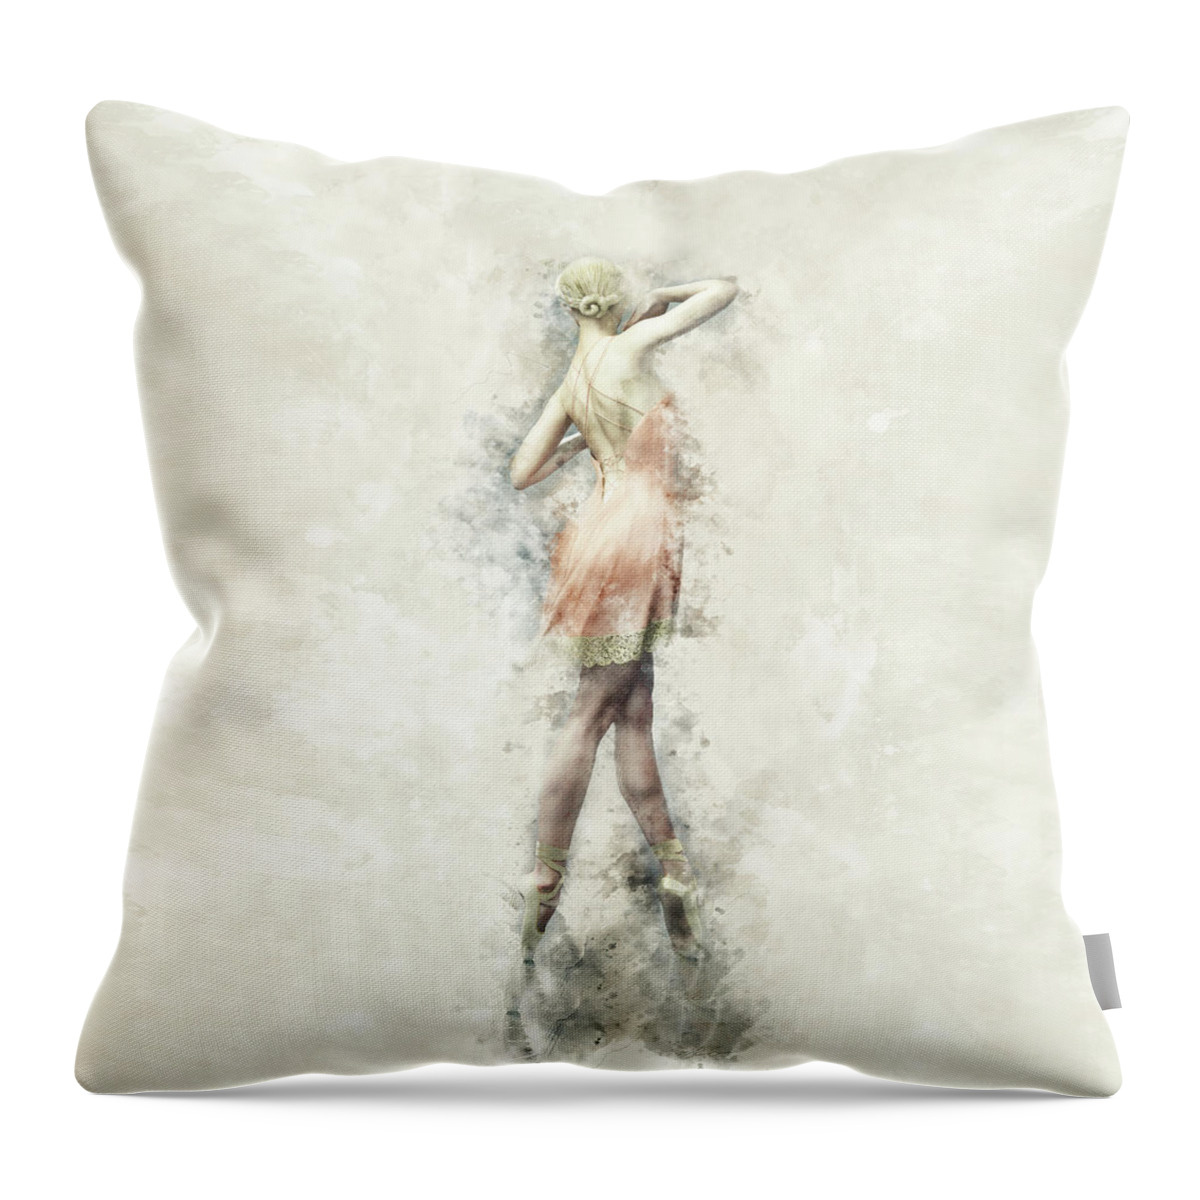 Ballerina Throw Pillow featuring the digital art Ballet Dancer by Shanina Conway